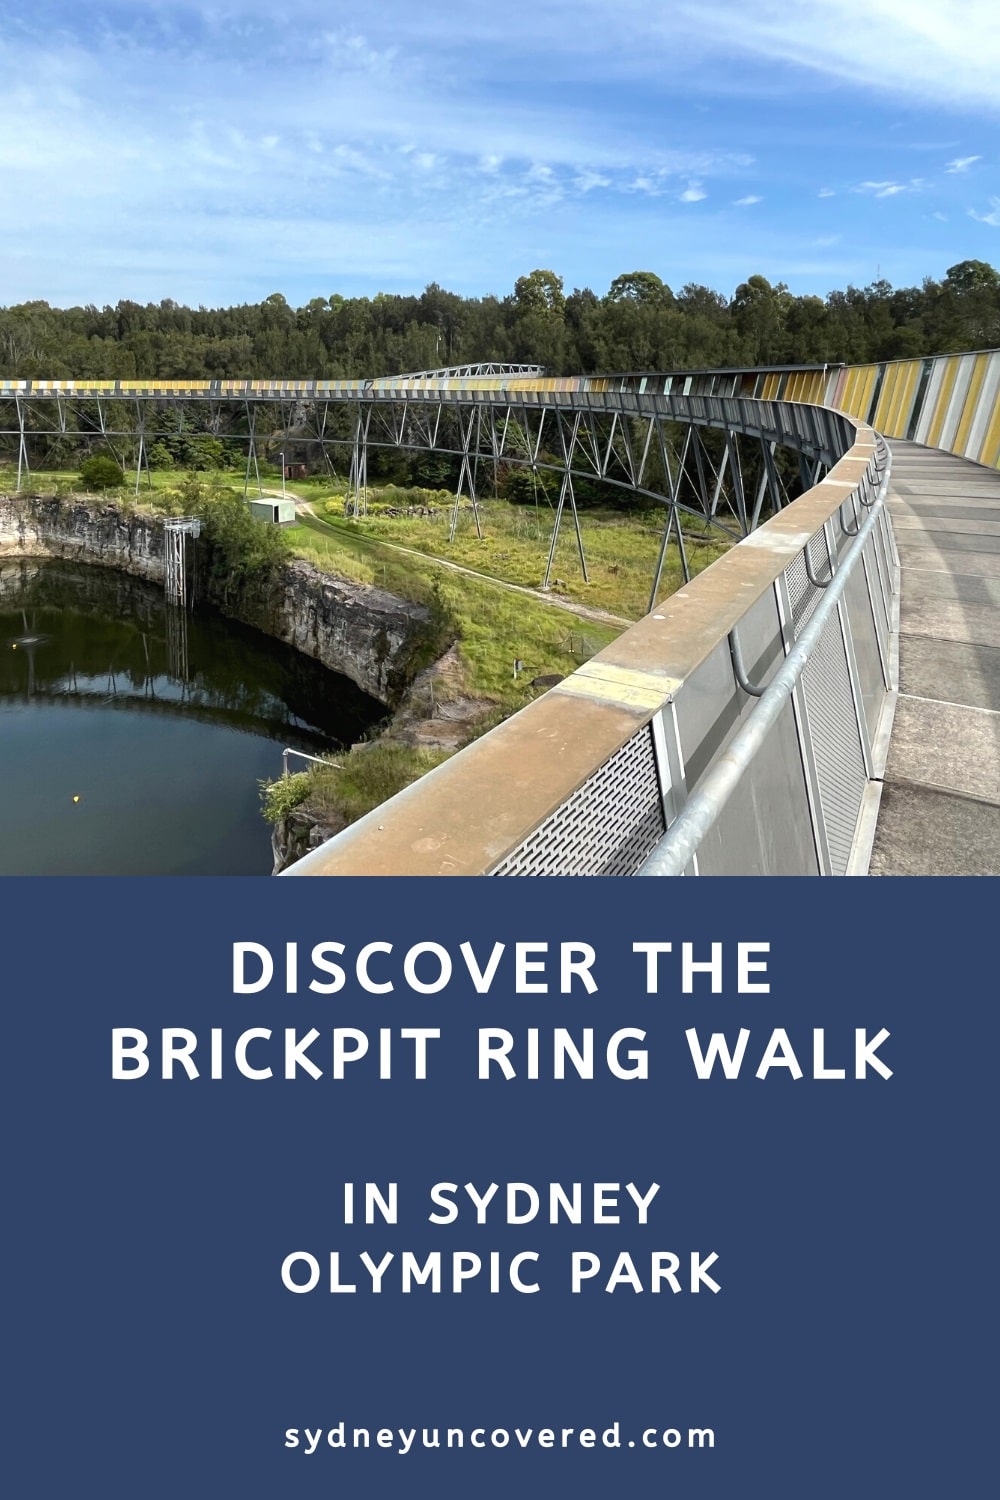 Brickpit Ring Walk in Sydney Olympic Park